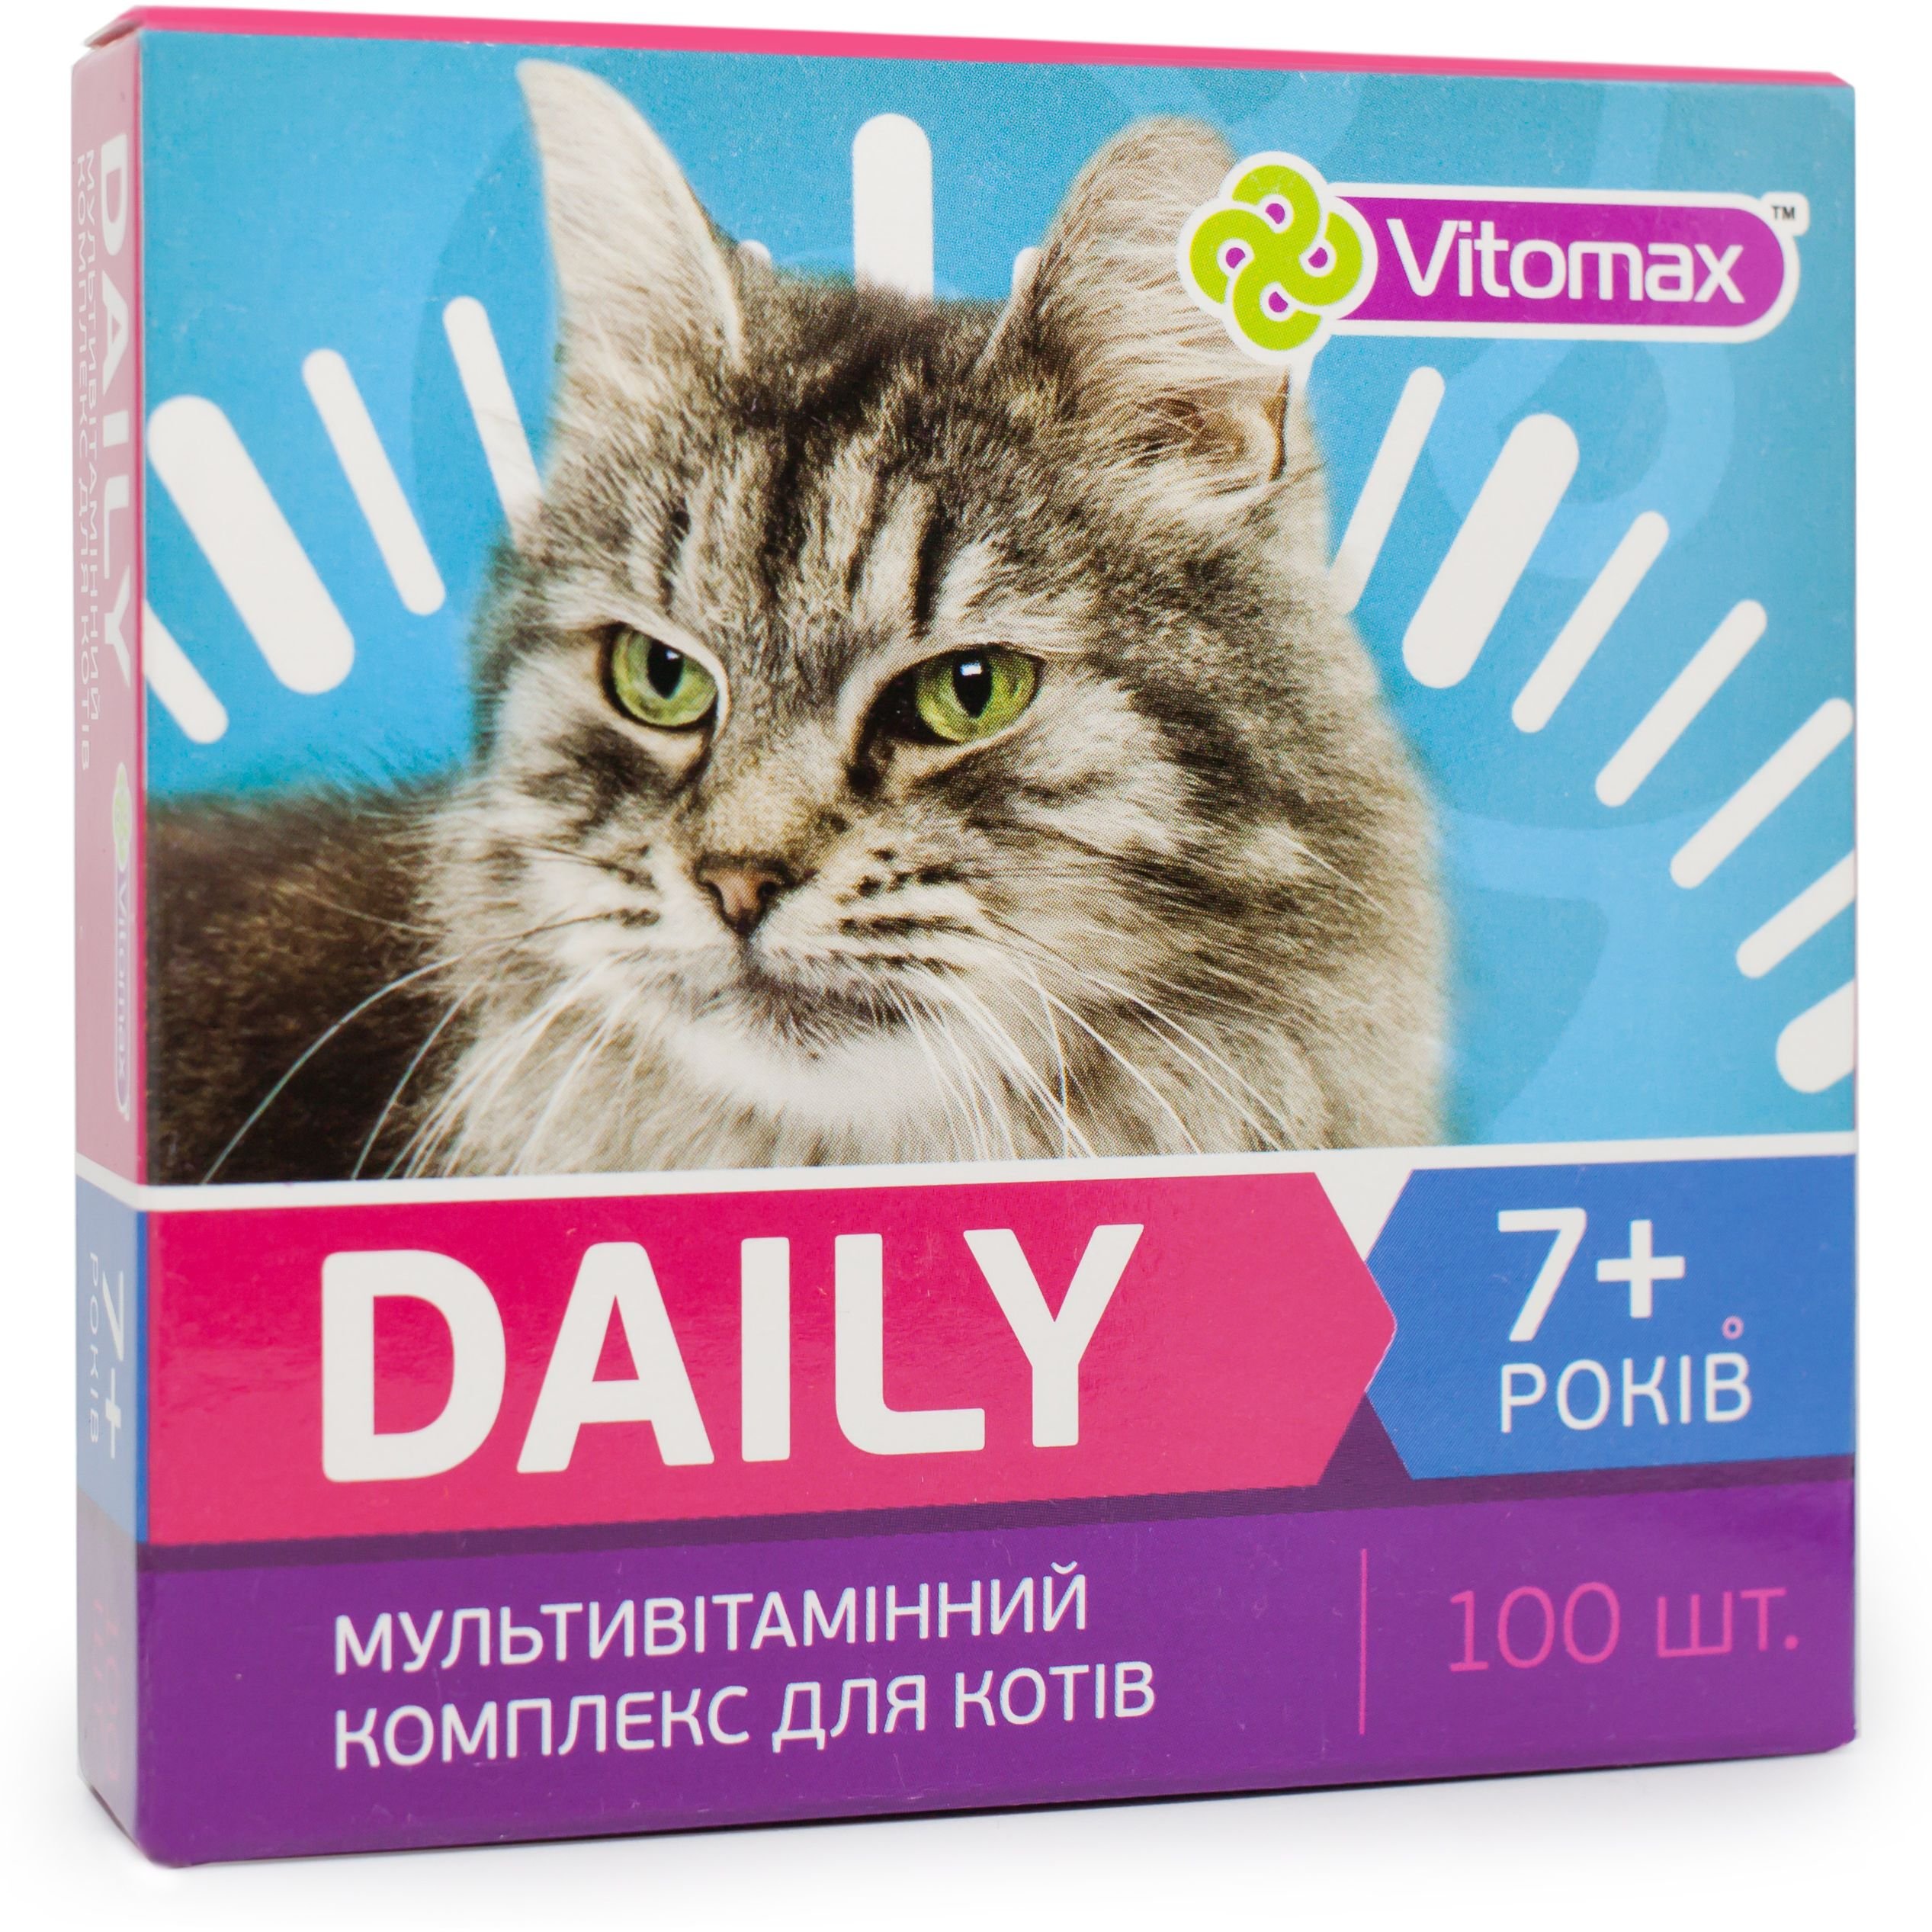 Мультивитаминный комплекс Vitomax Daily для кошек 7+ лет, 100 таблеток - фото 1